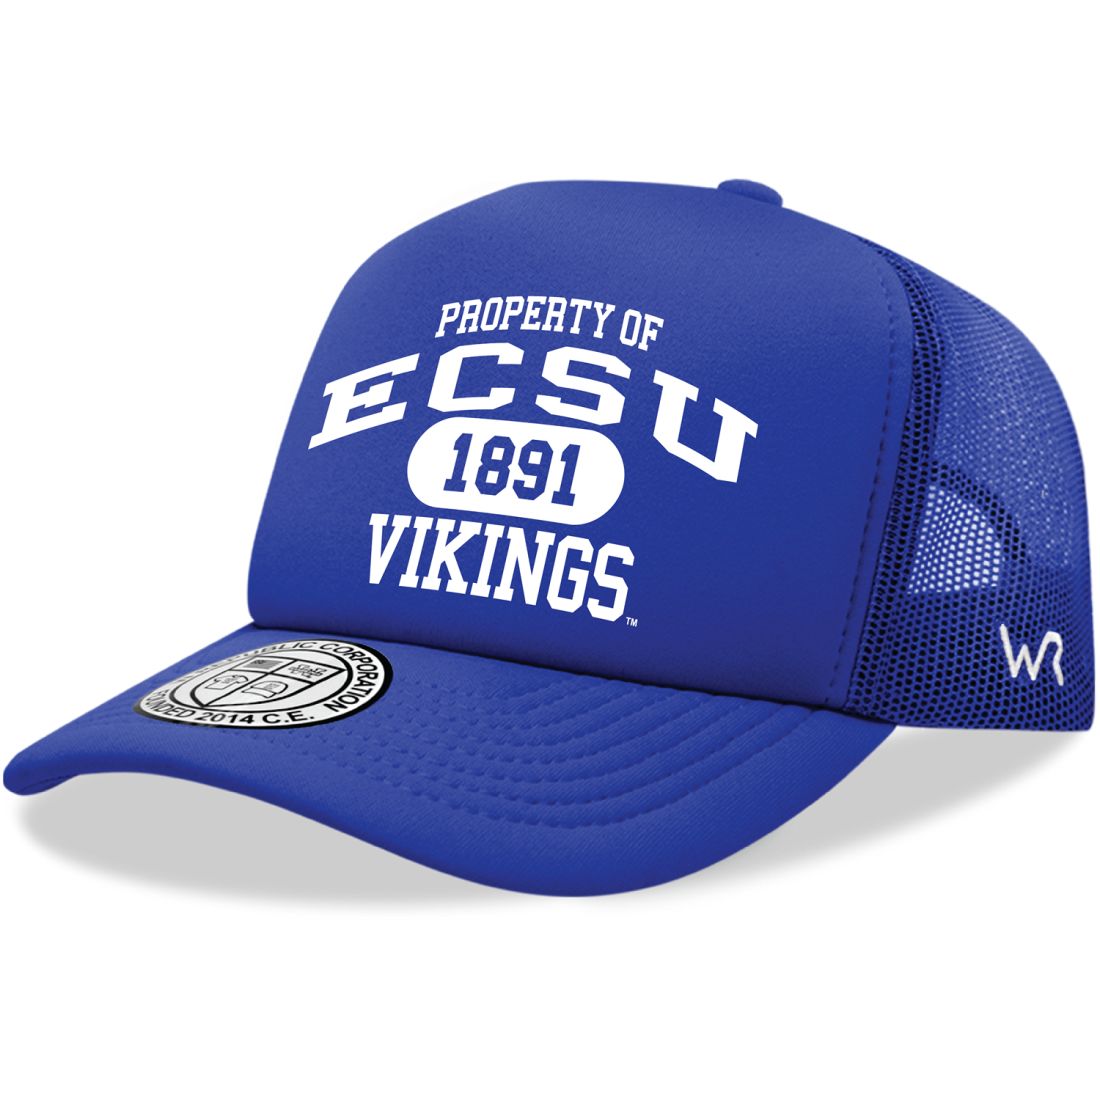 ECSU Elizabeth City State University Vikings Property Foam Trucker Hats